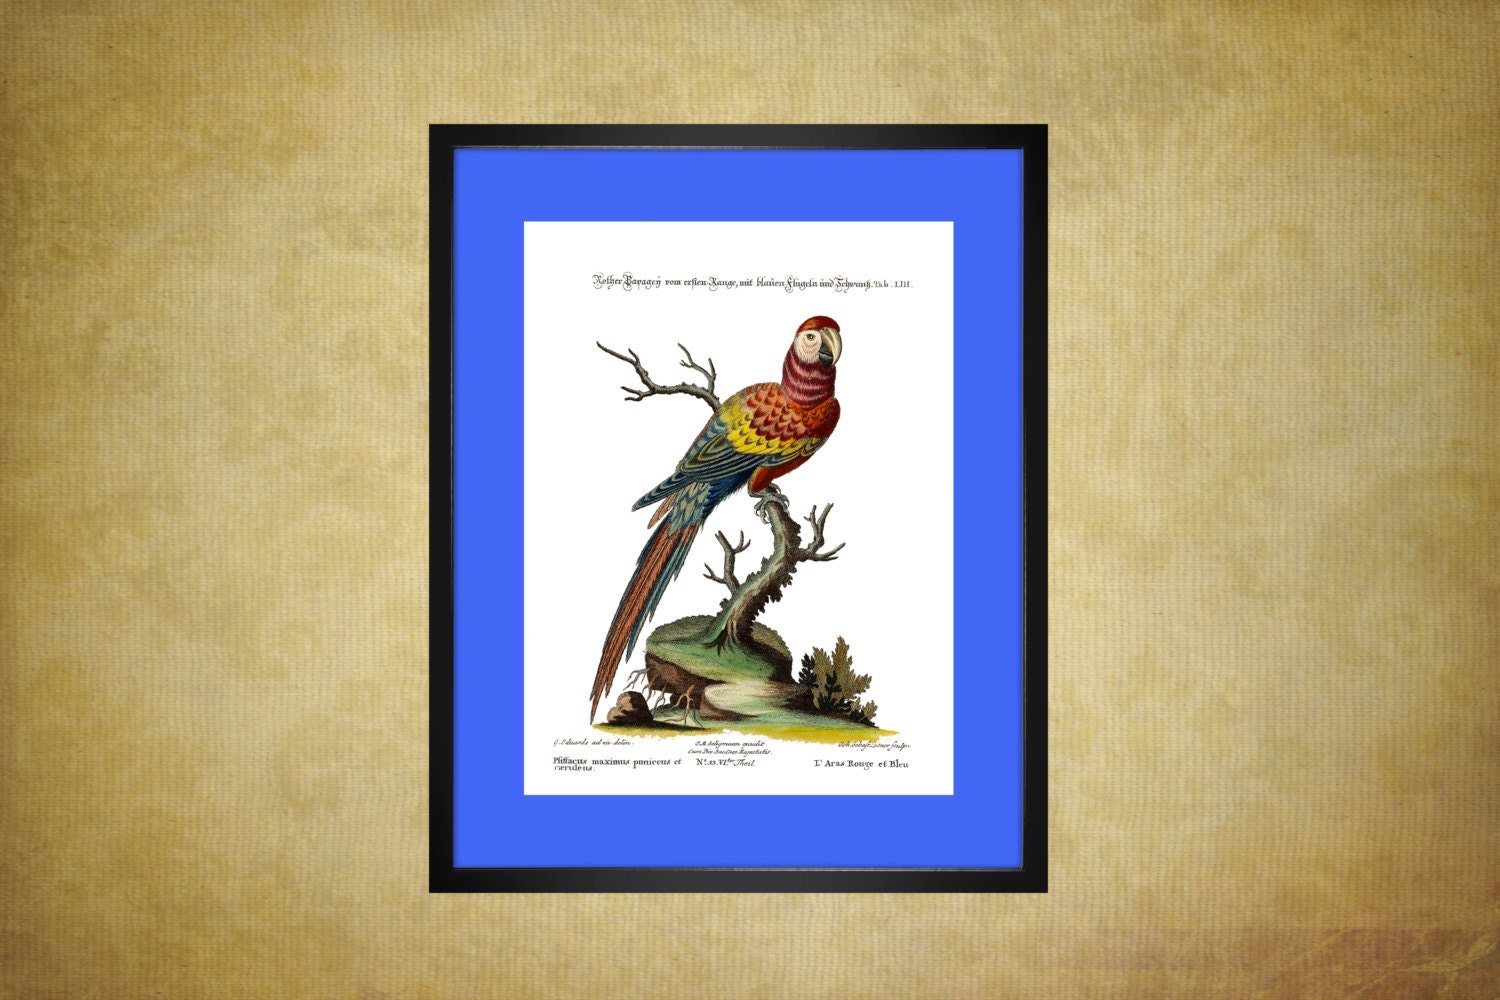 Instant Download Antique 1700's Macaw Digital Print  8" x 10" Parrot Scientific Illustration PNG & JPG Enhanced 300 DPI